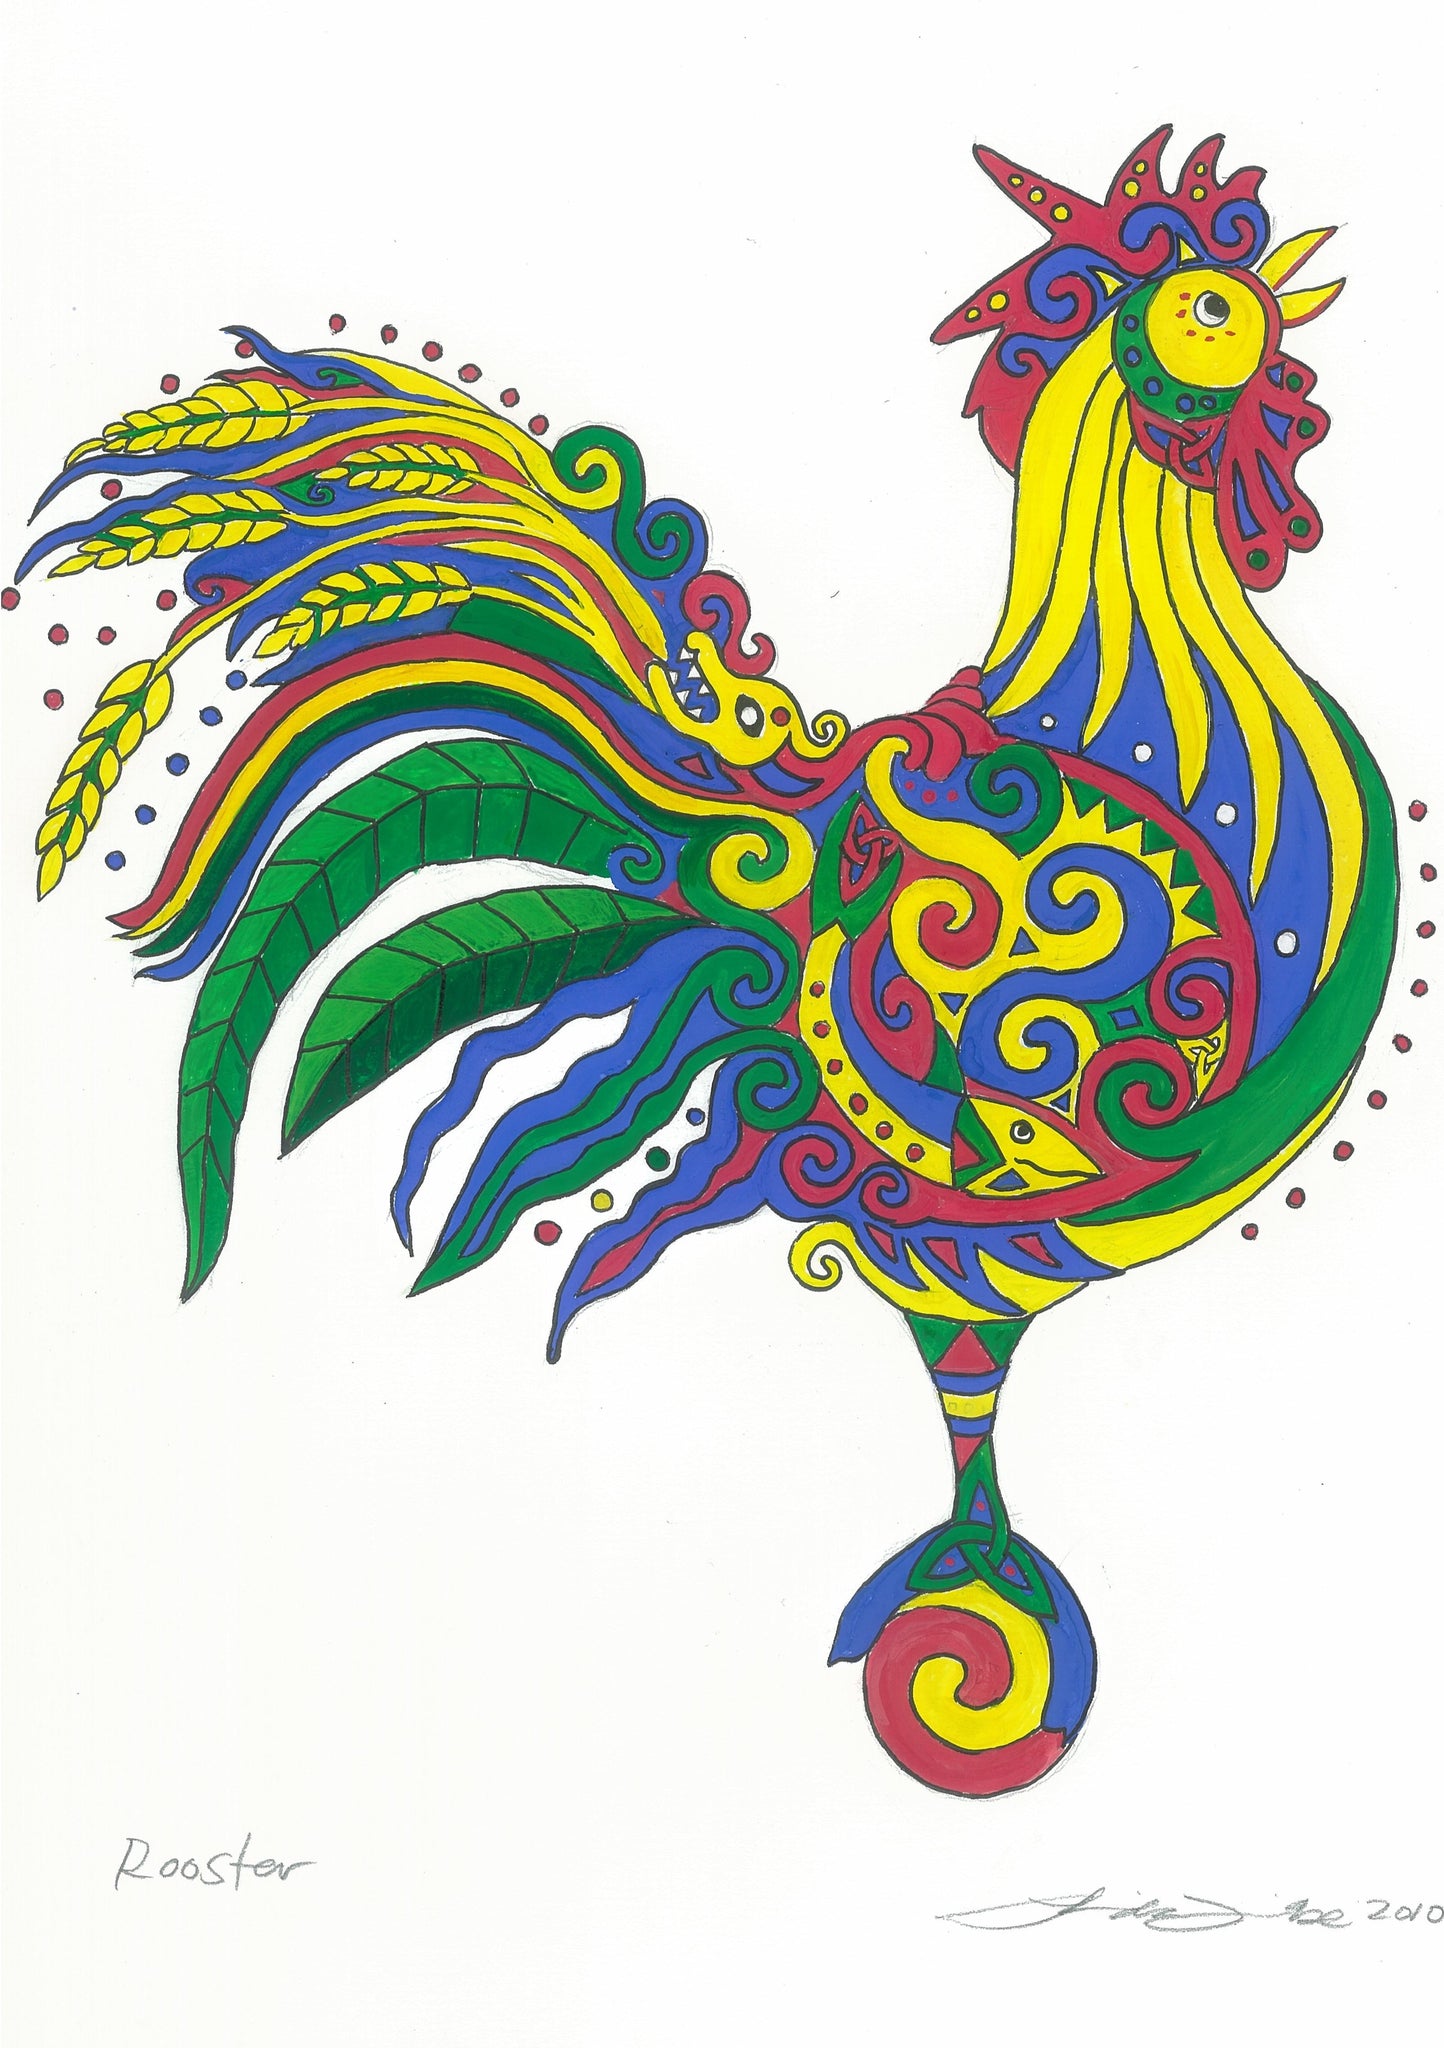 2010 Celtic Festival Fine Art Print: The Rooster